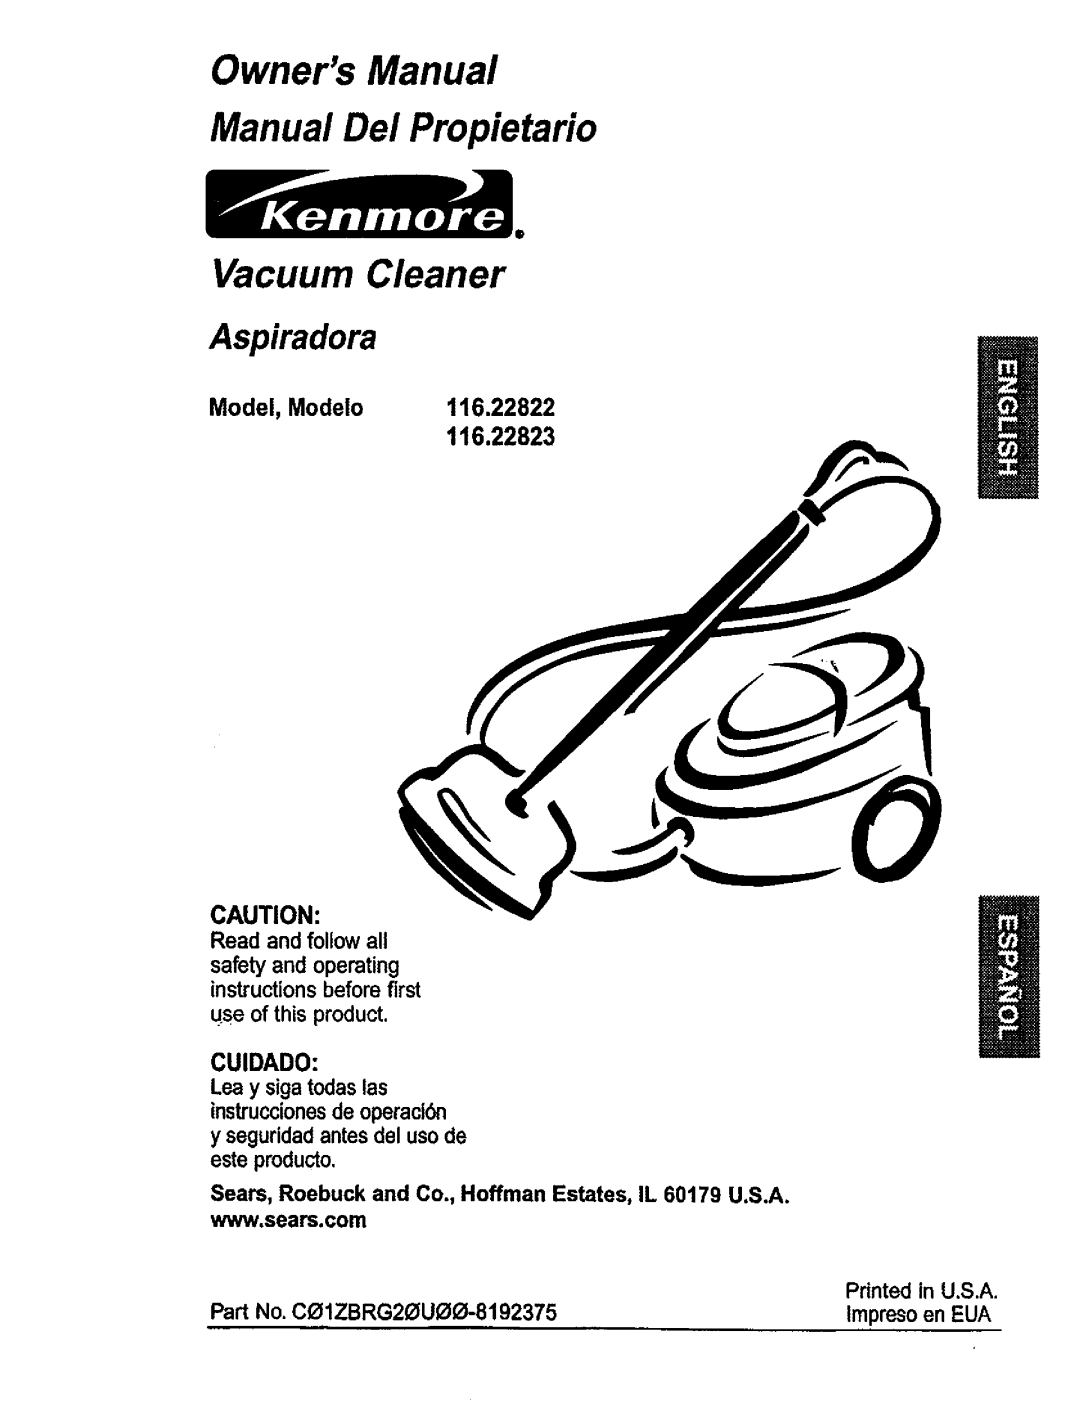 Kenmore owner manual 116.22823, Model, Modelo116.22822, Read and follow all, use of this product CUIDADO, Aspiradora 